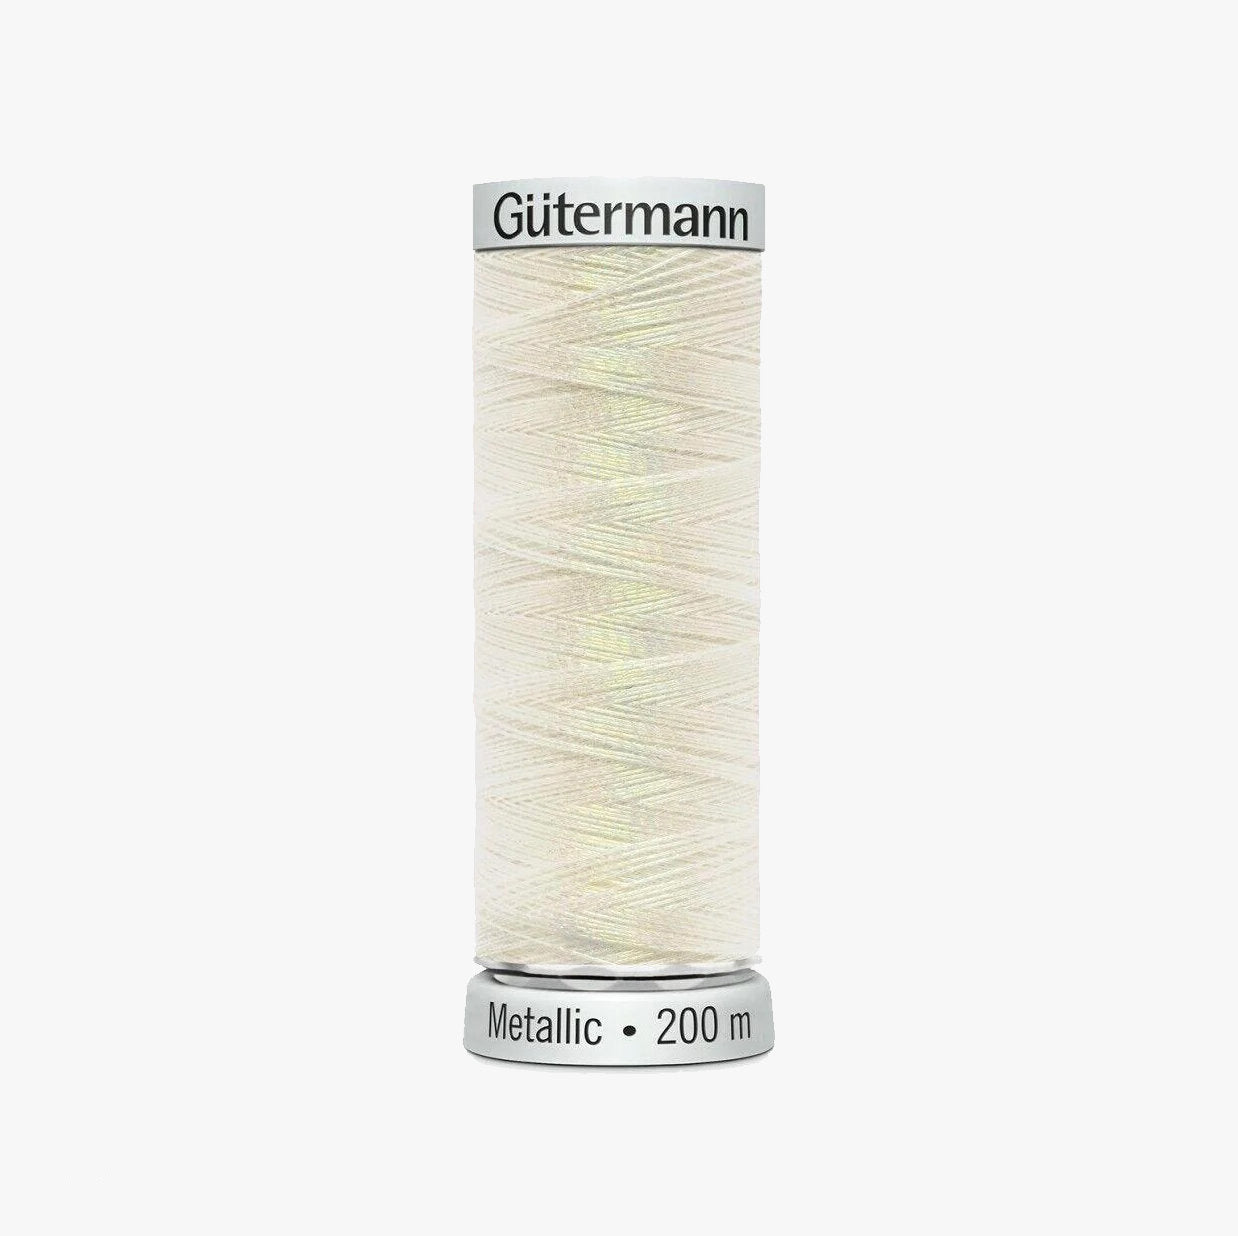 7021 Gutermann Metallic Thread 200m - Metallic Effect for Decorative Seams and Machine Embroidery